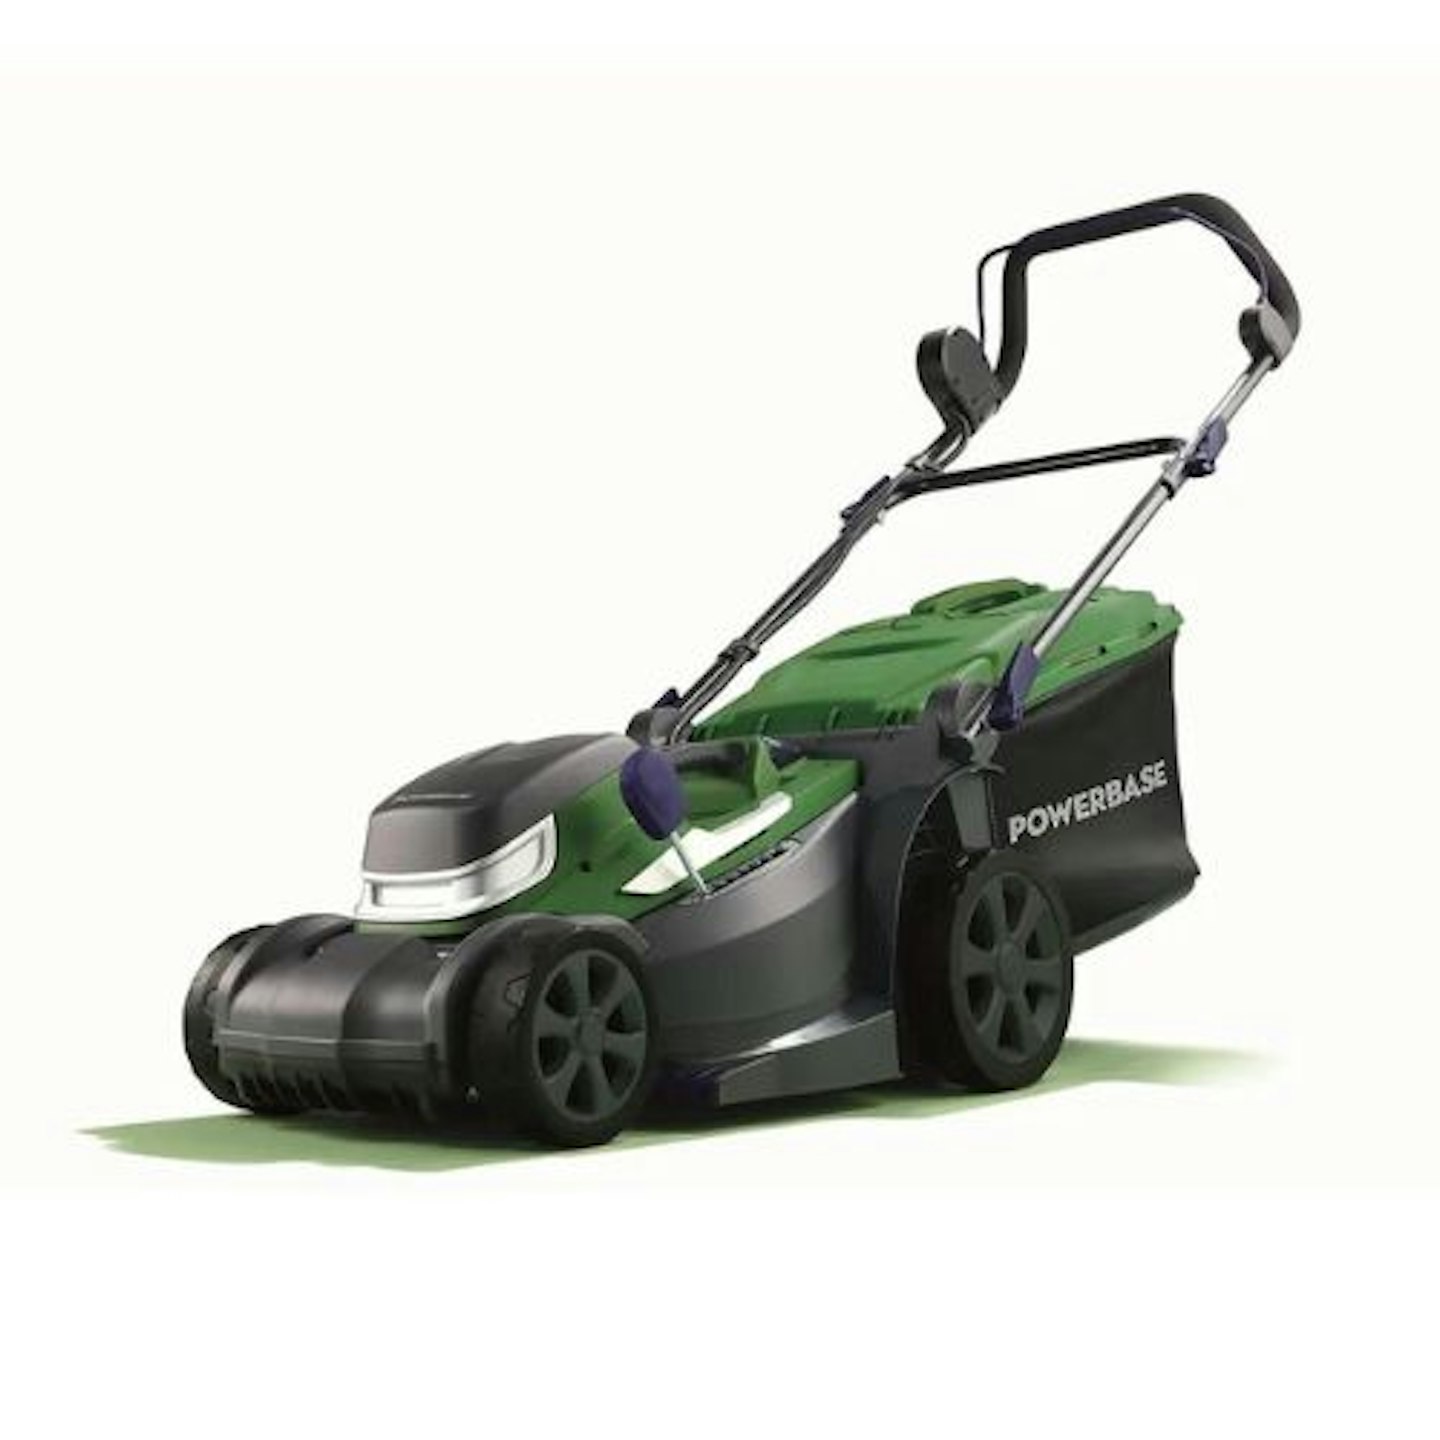 Powerbase 40V Cordless Lawn Mower - 34cm